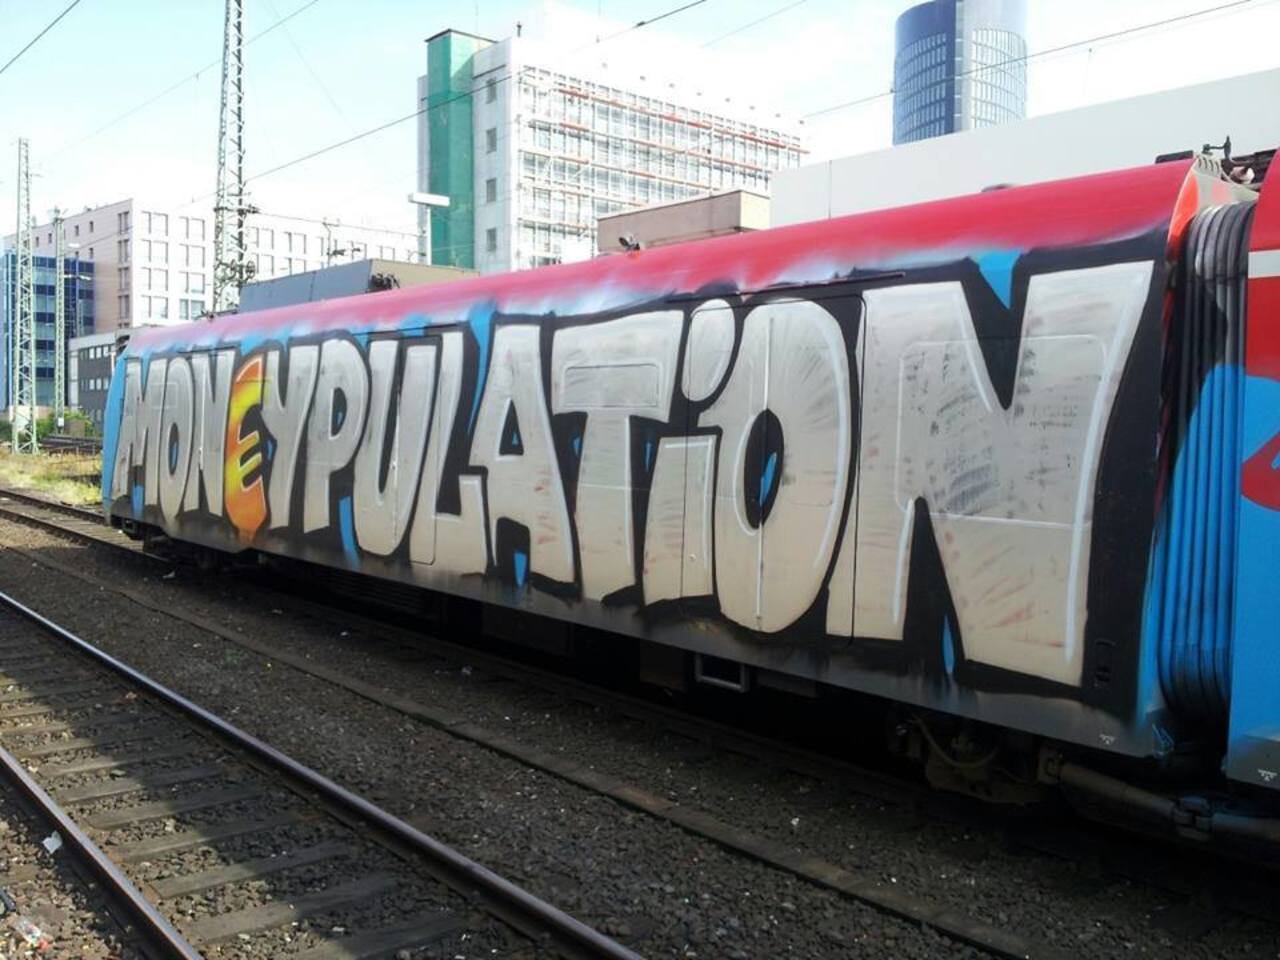 Mon€yPulation #StreetArt #Graffiti #Mural https://t.co/Ook2lkn0Pu